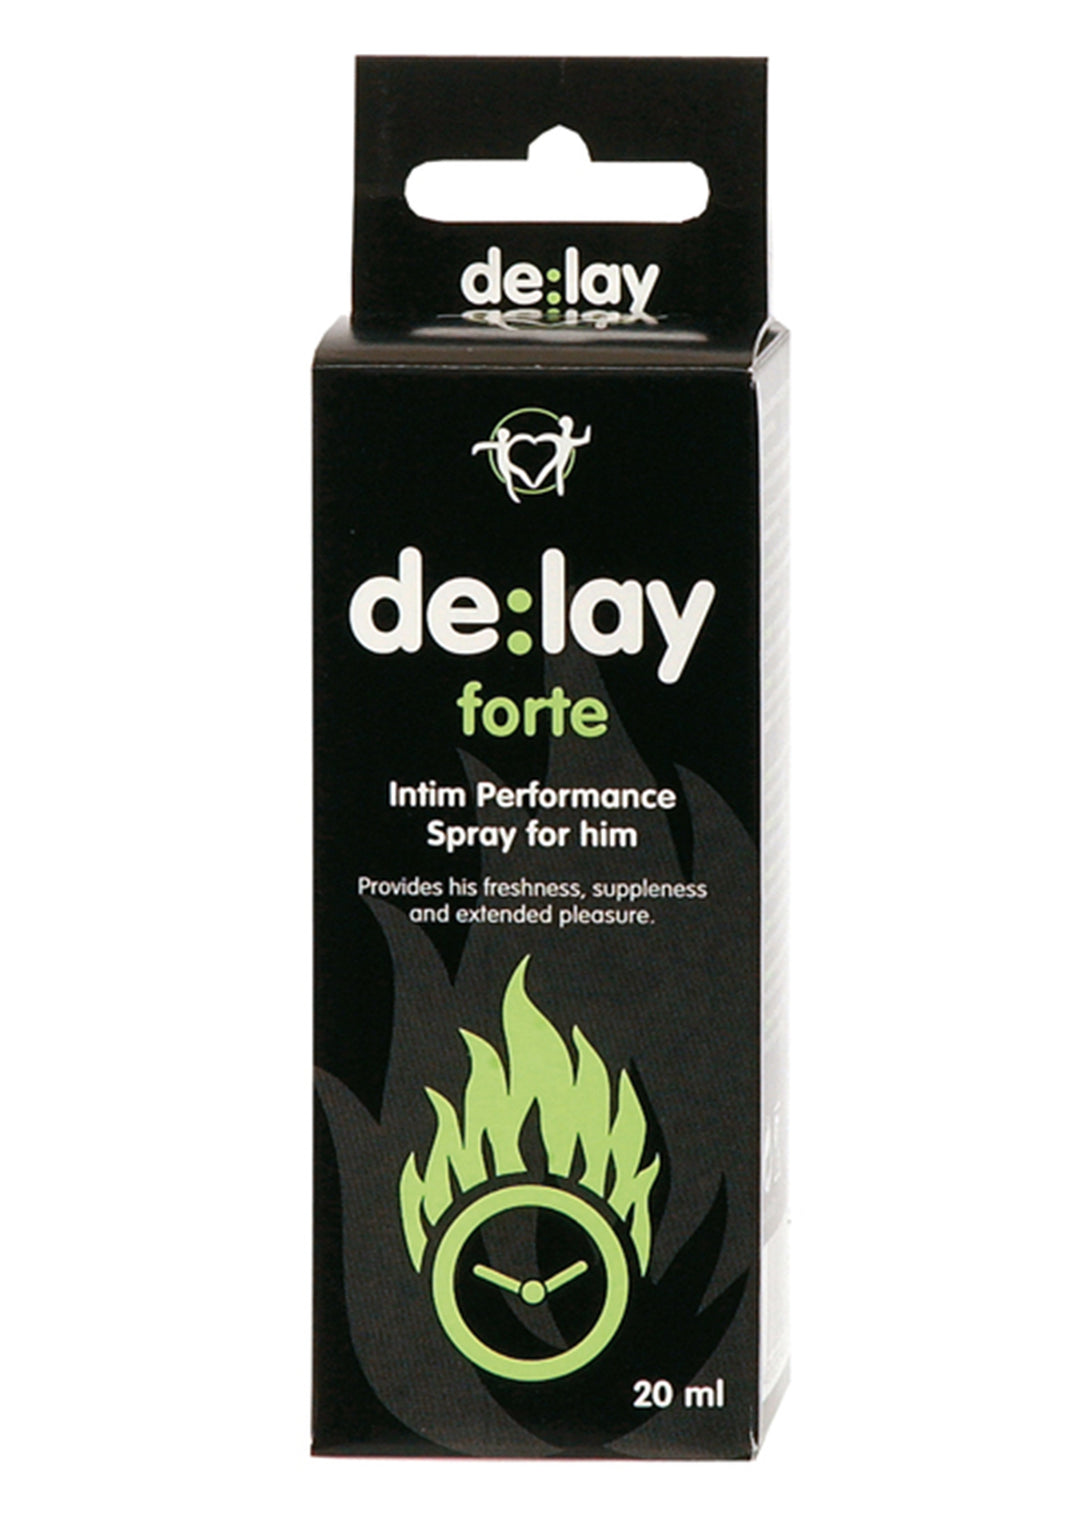 Delay Forte Spray 20ml spray against premature ejaculation